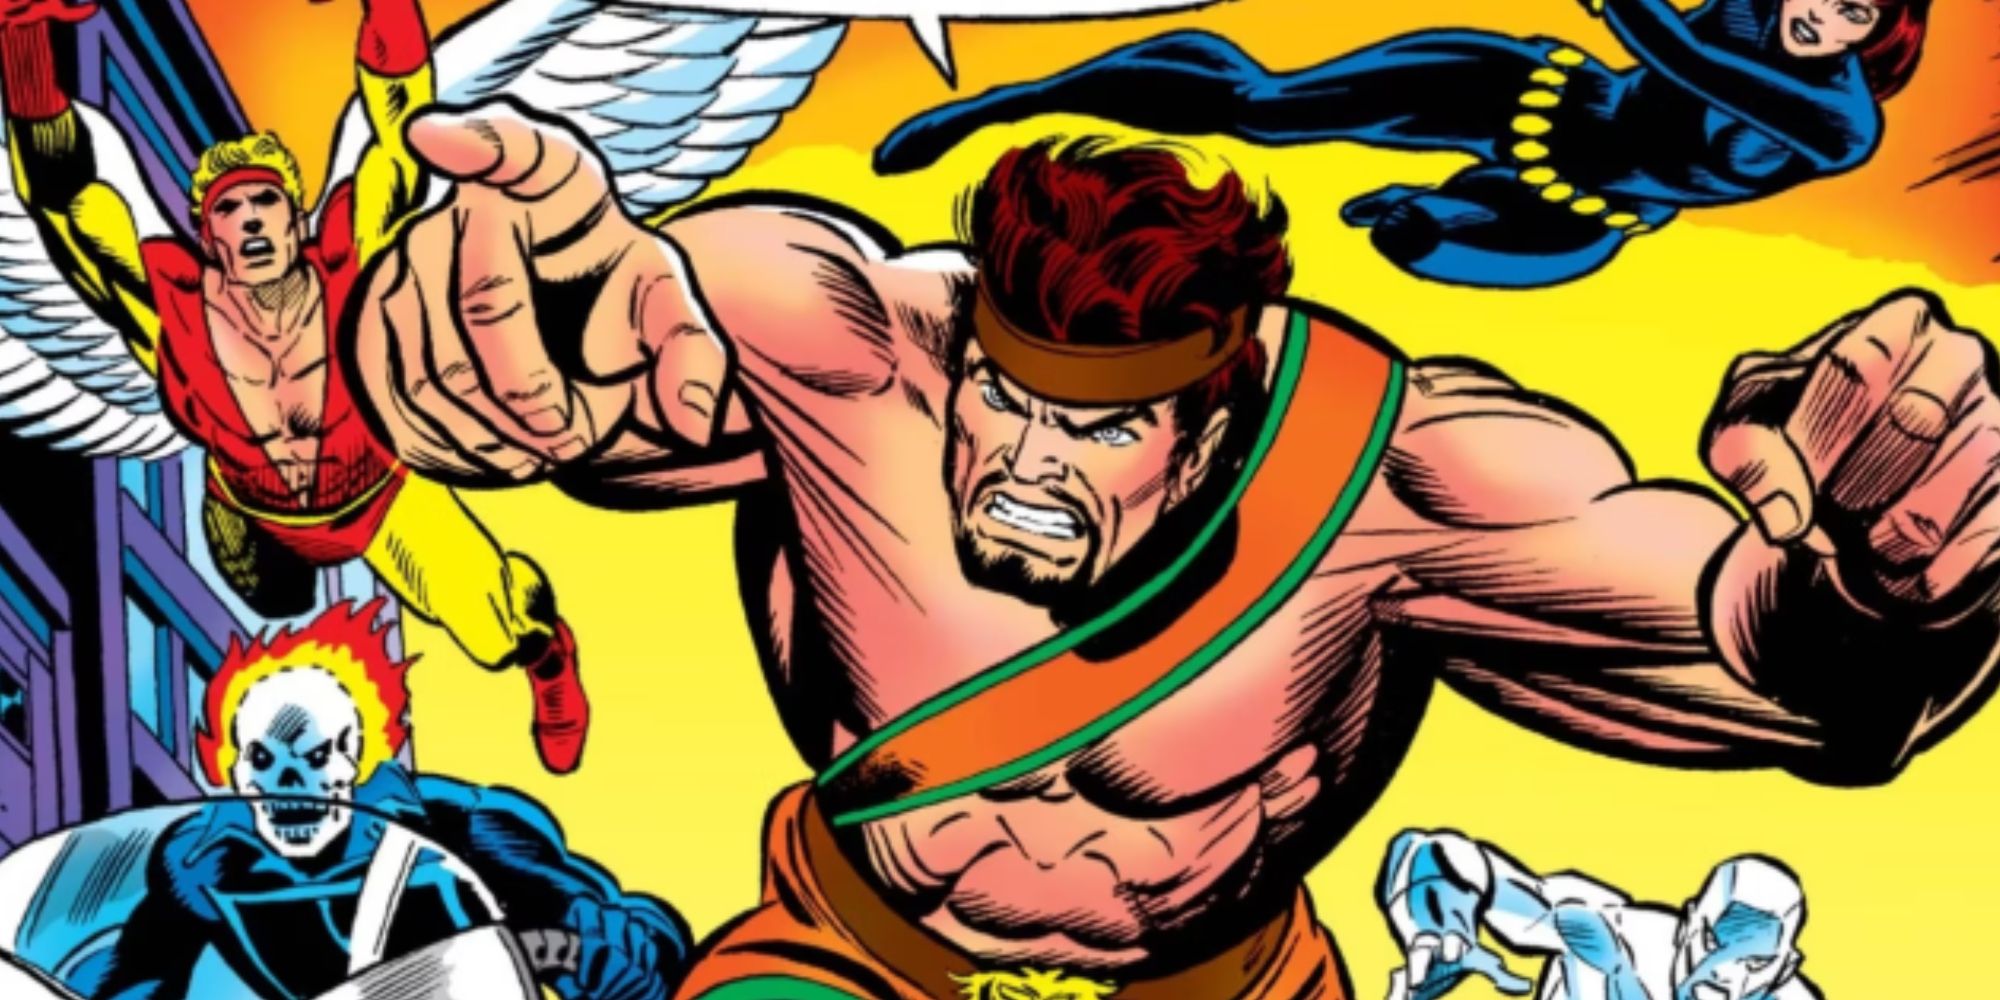 Image of Hercules fighting alongside Marvel characters